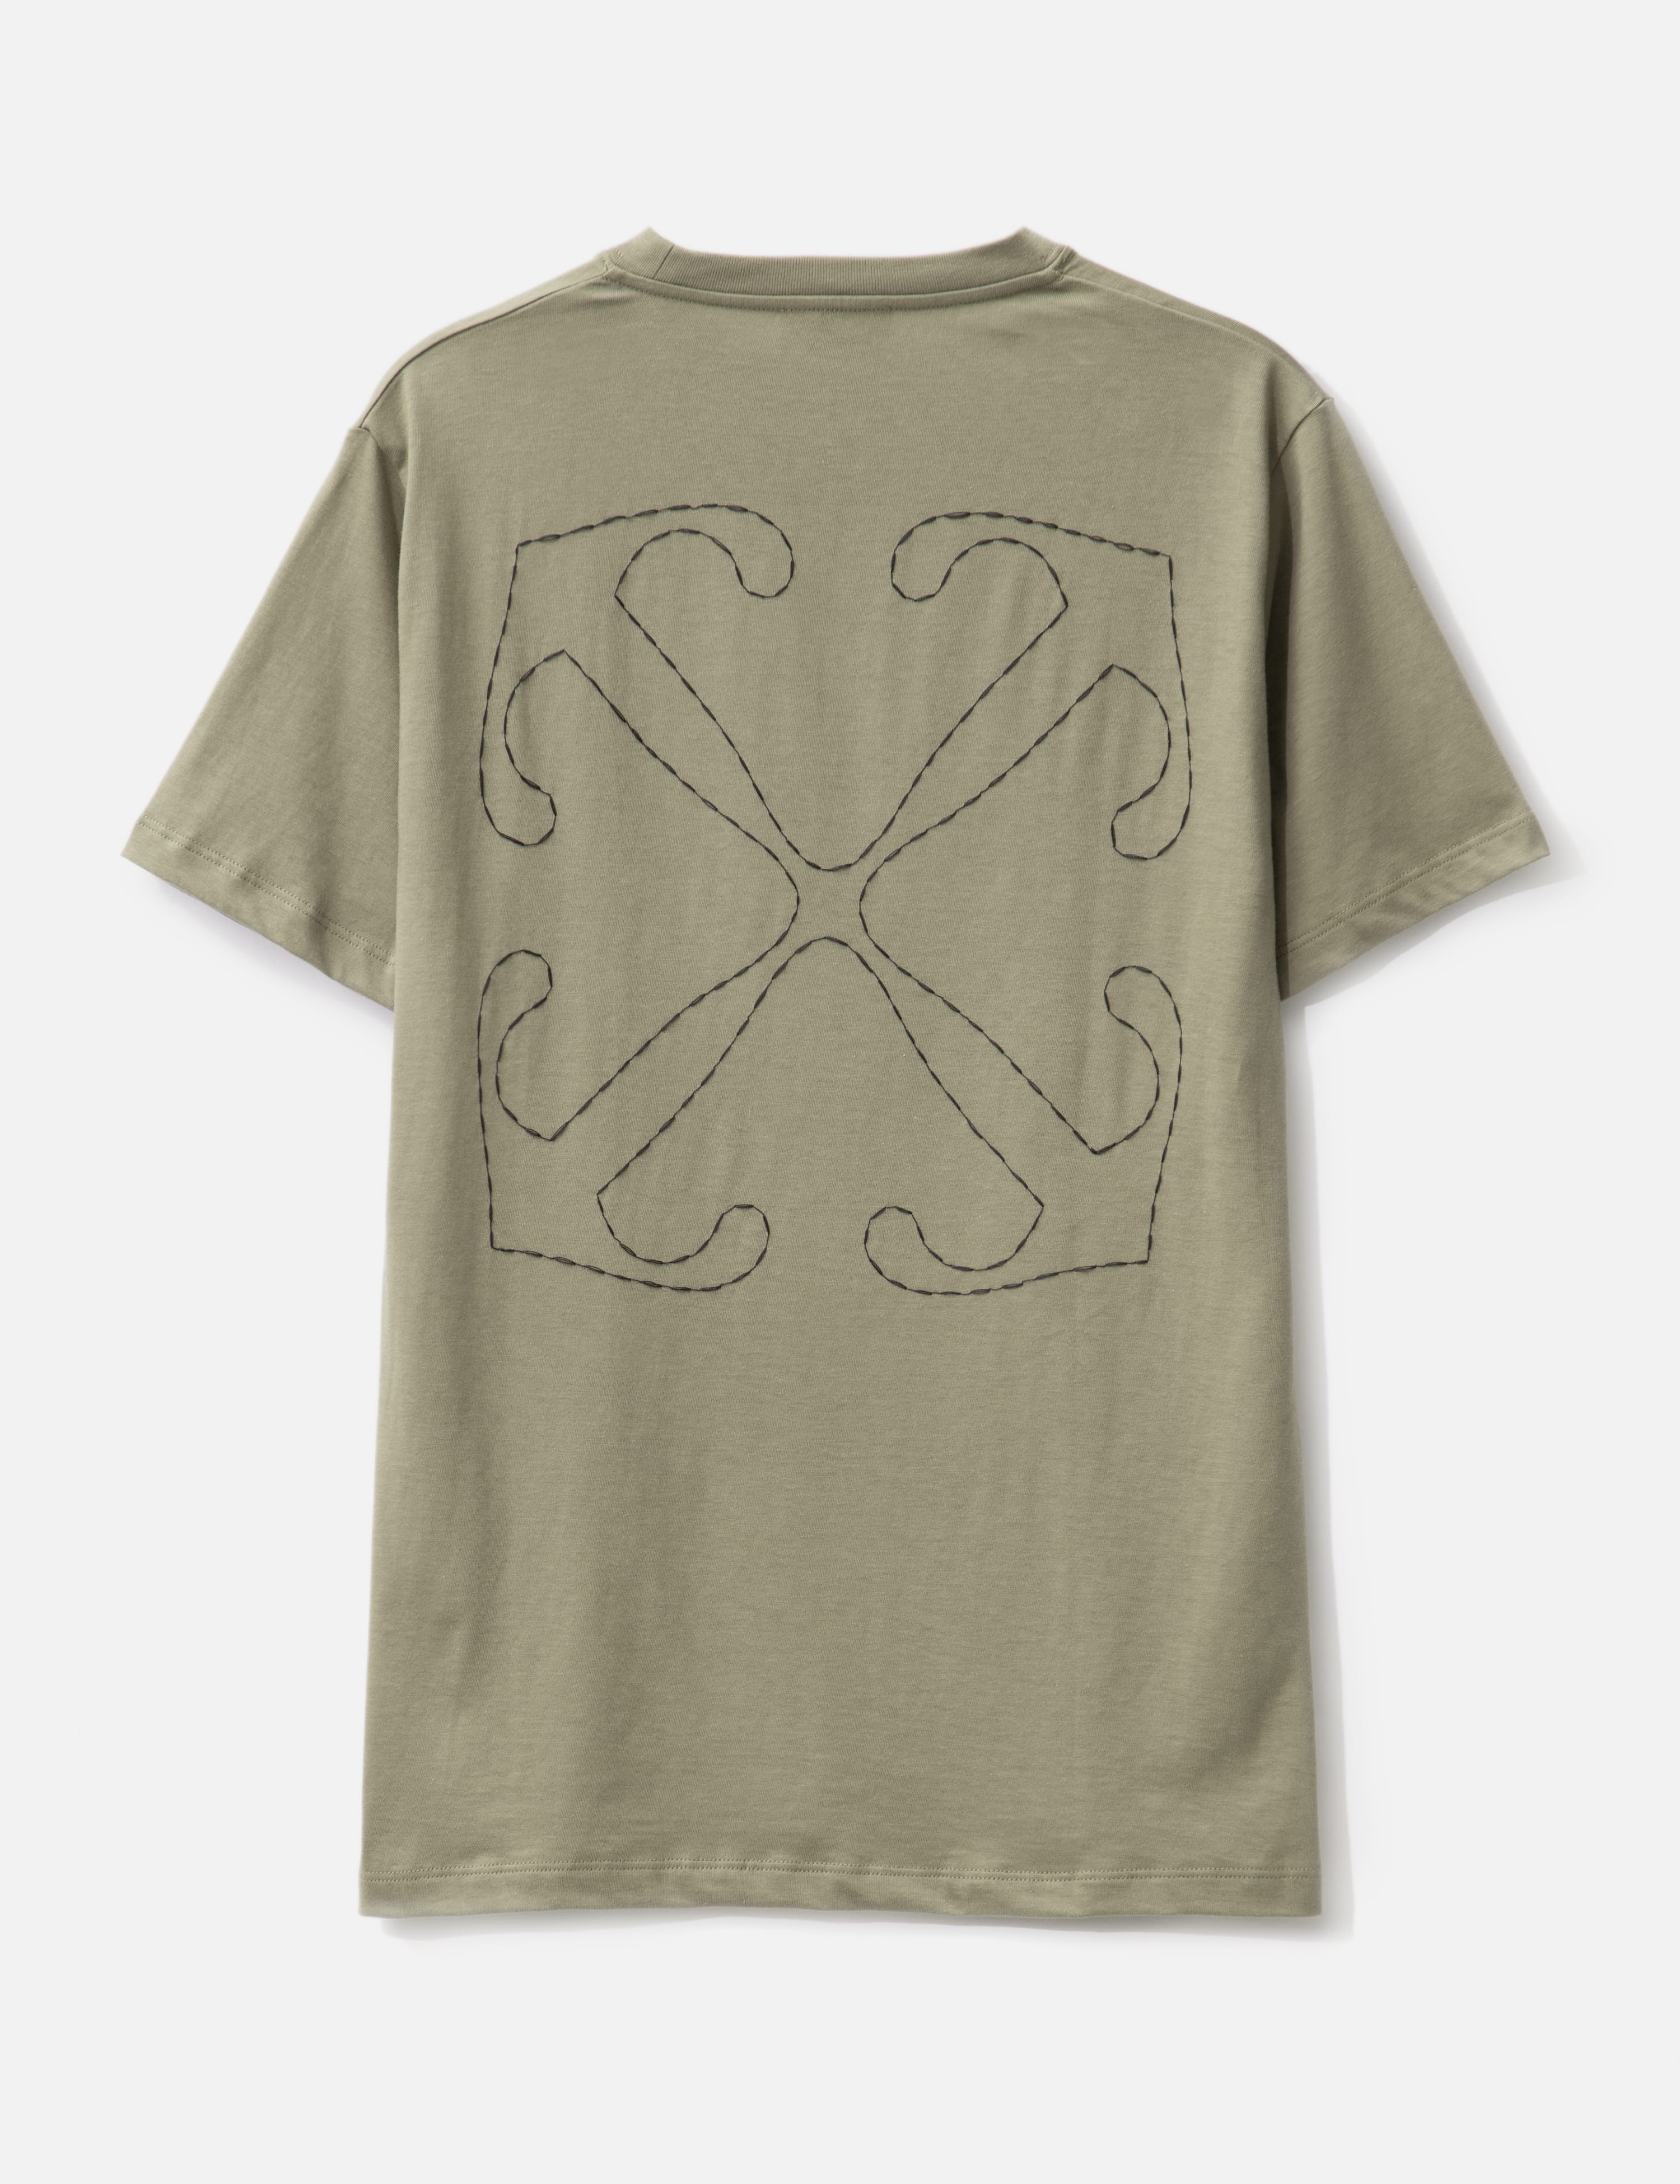 Icecream - FAUXLEX T-shirt | HBX - Globally Curated Fashion and